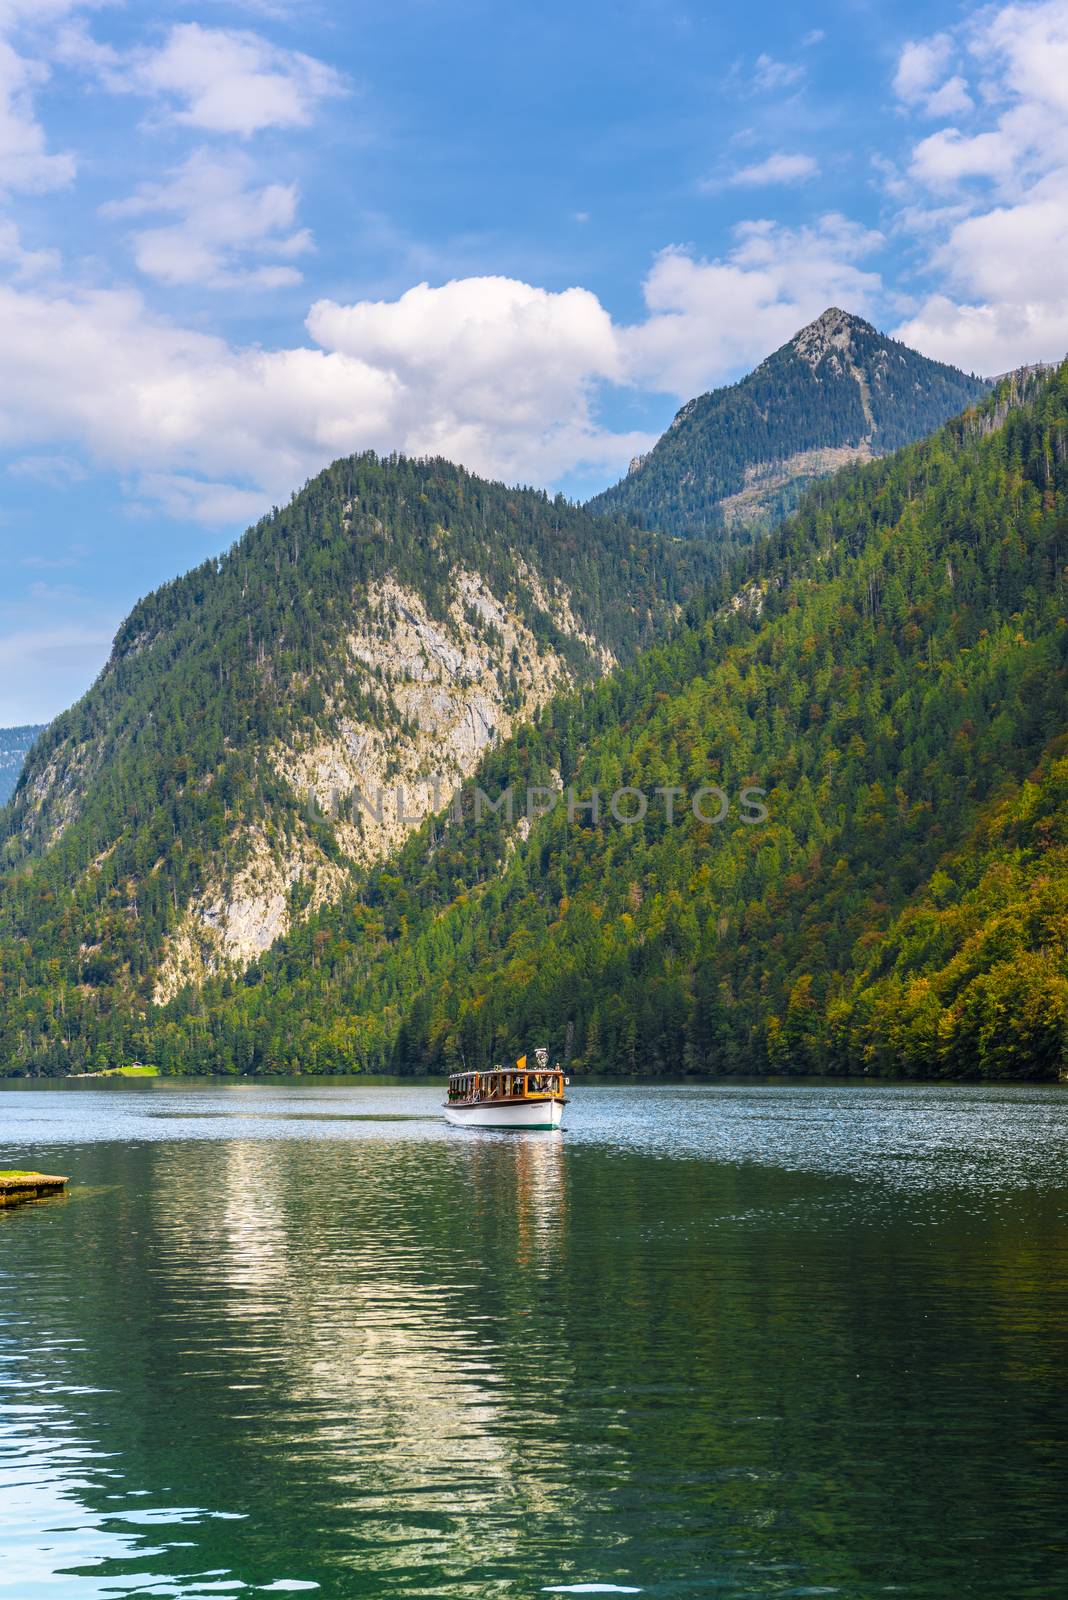 Electric boat in Koenigssee, Konigsee, Berchtesgaden National Park, Bavaria Germany